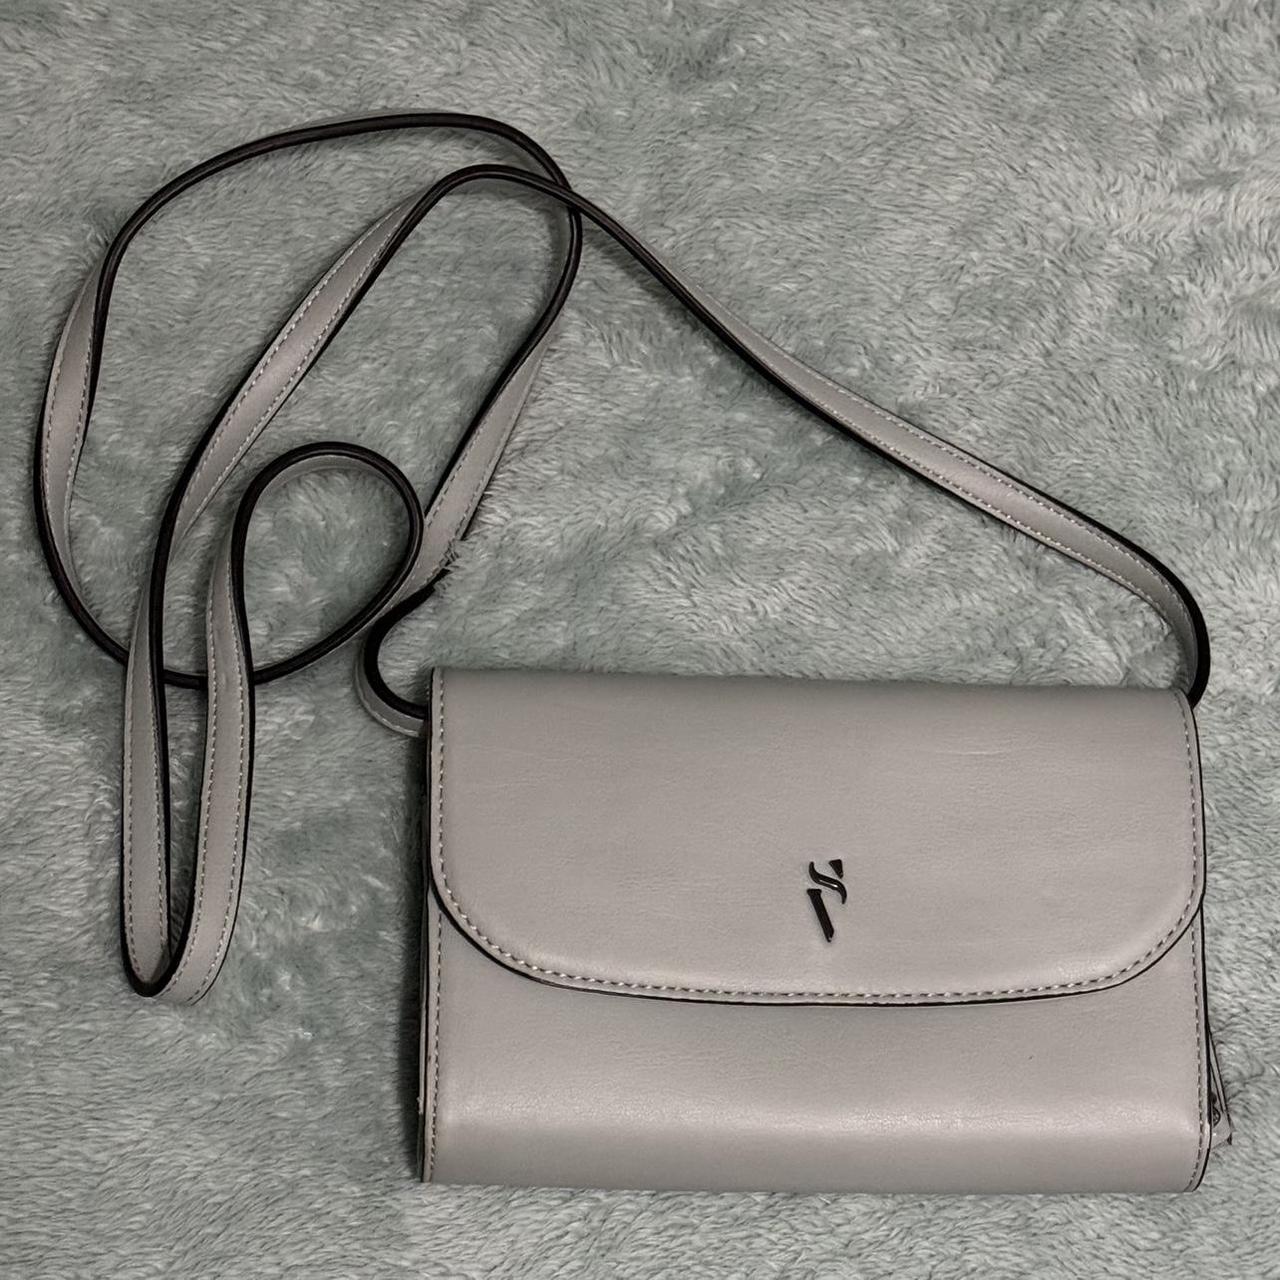 Simply vera wang purse handbag black with SV logo adjustable leather straps  | eBay